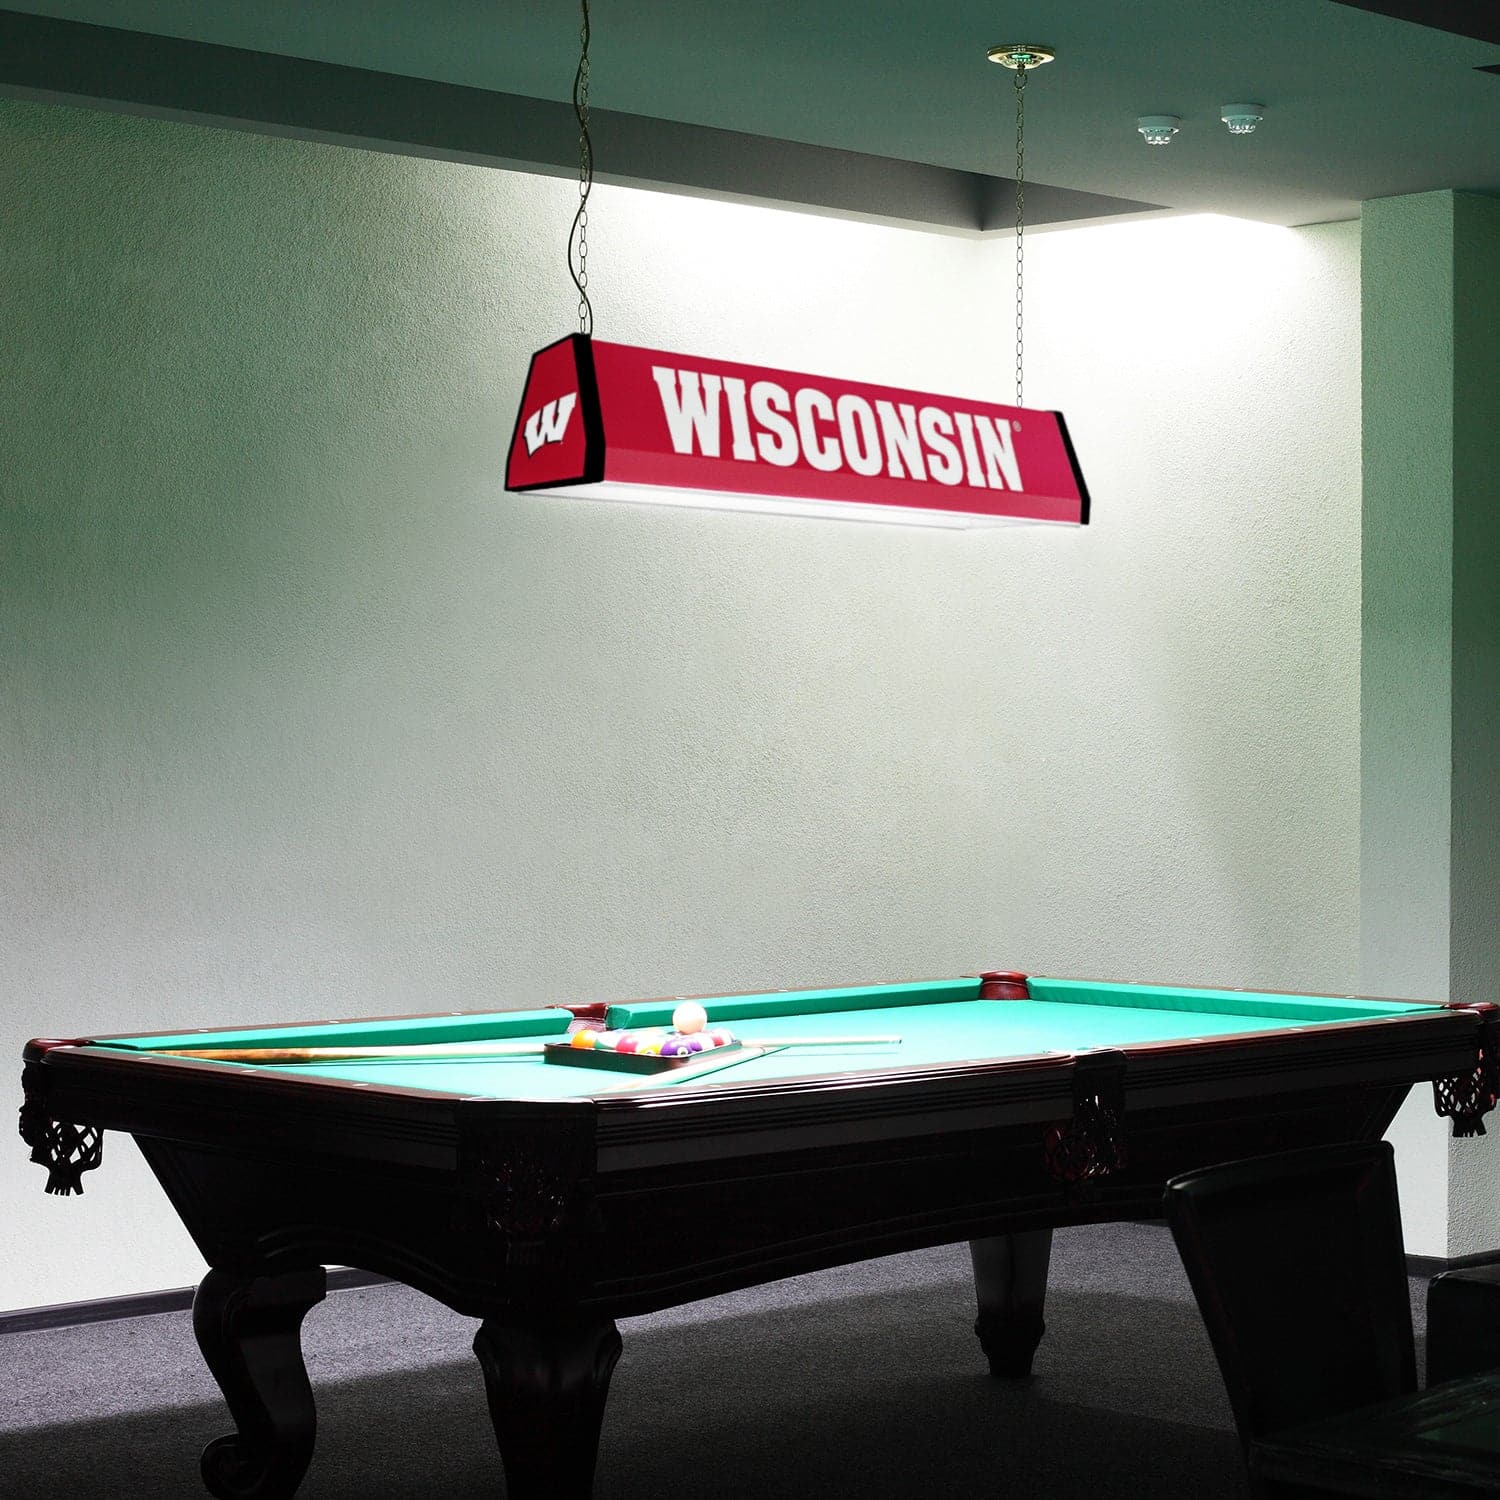 Wisconsin Badgers: Standard Pool Table Light - The Fan-Brand